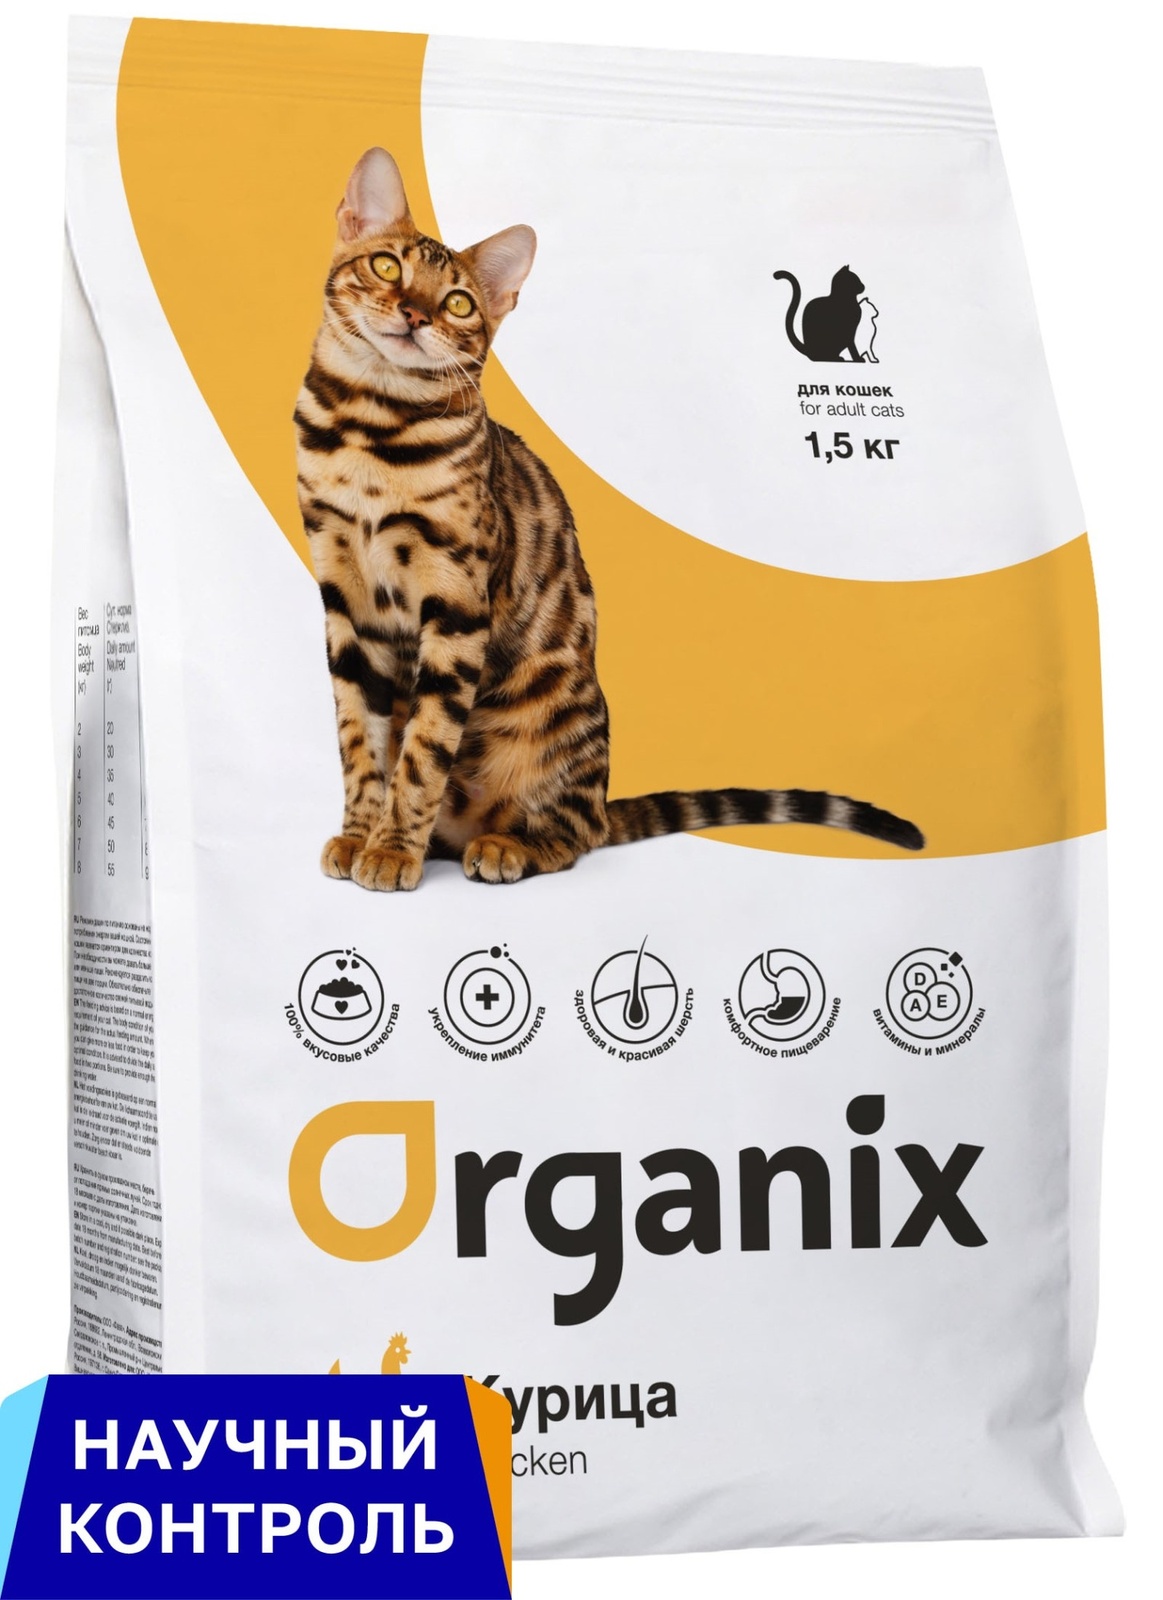 Organix Organix сухой корм для кошек, с курочкой (7,5 кг)